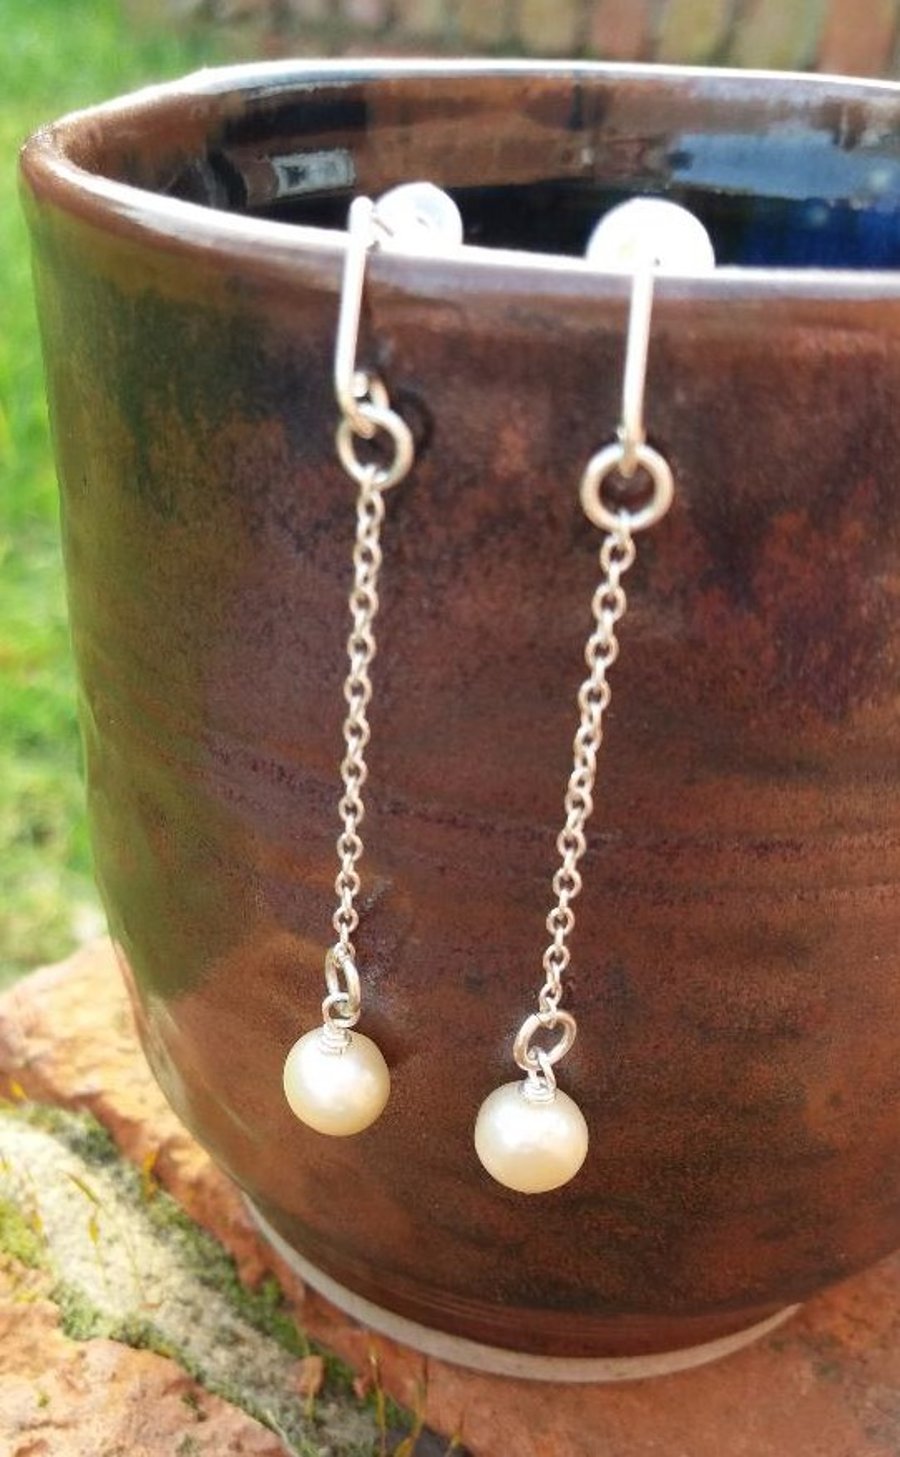 Pearl on a chain earrings